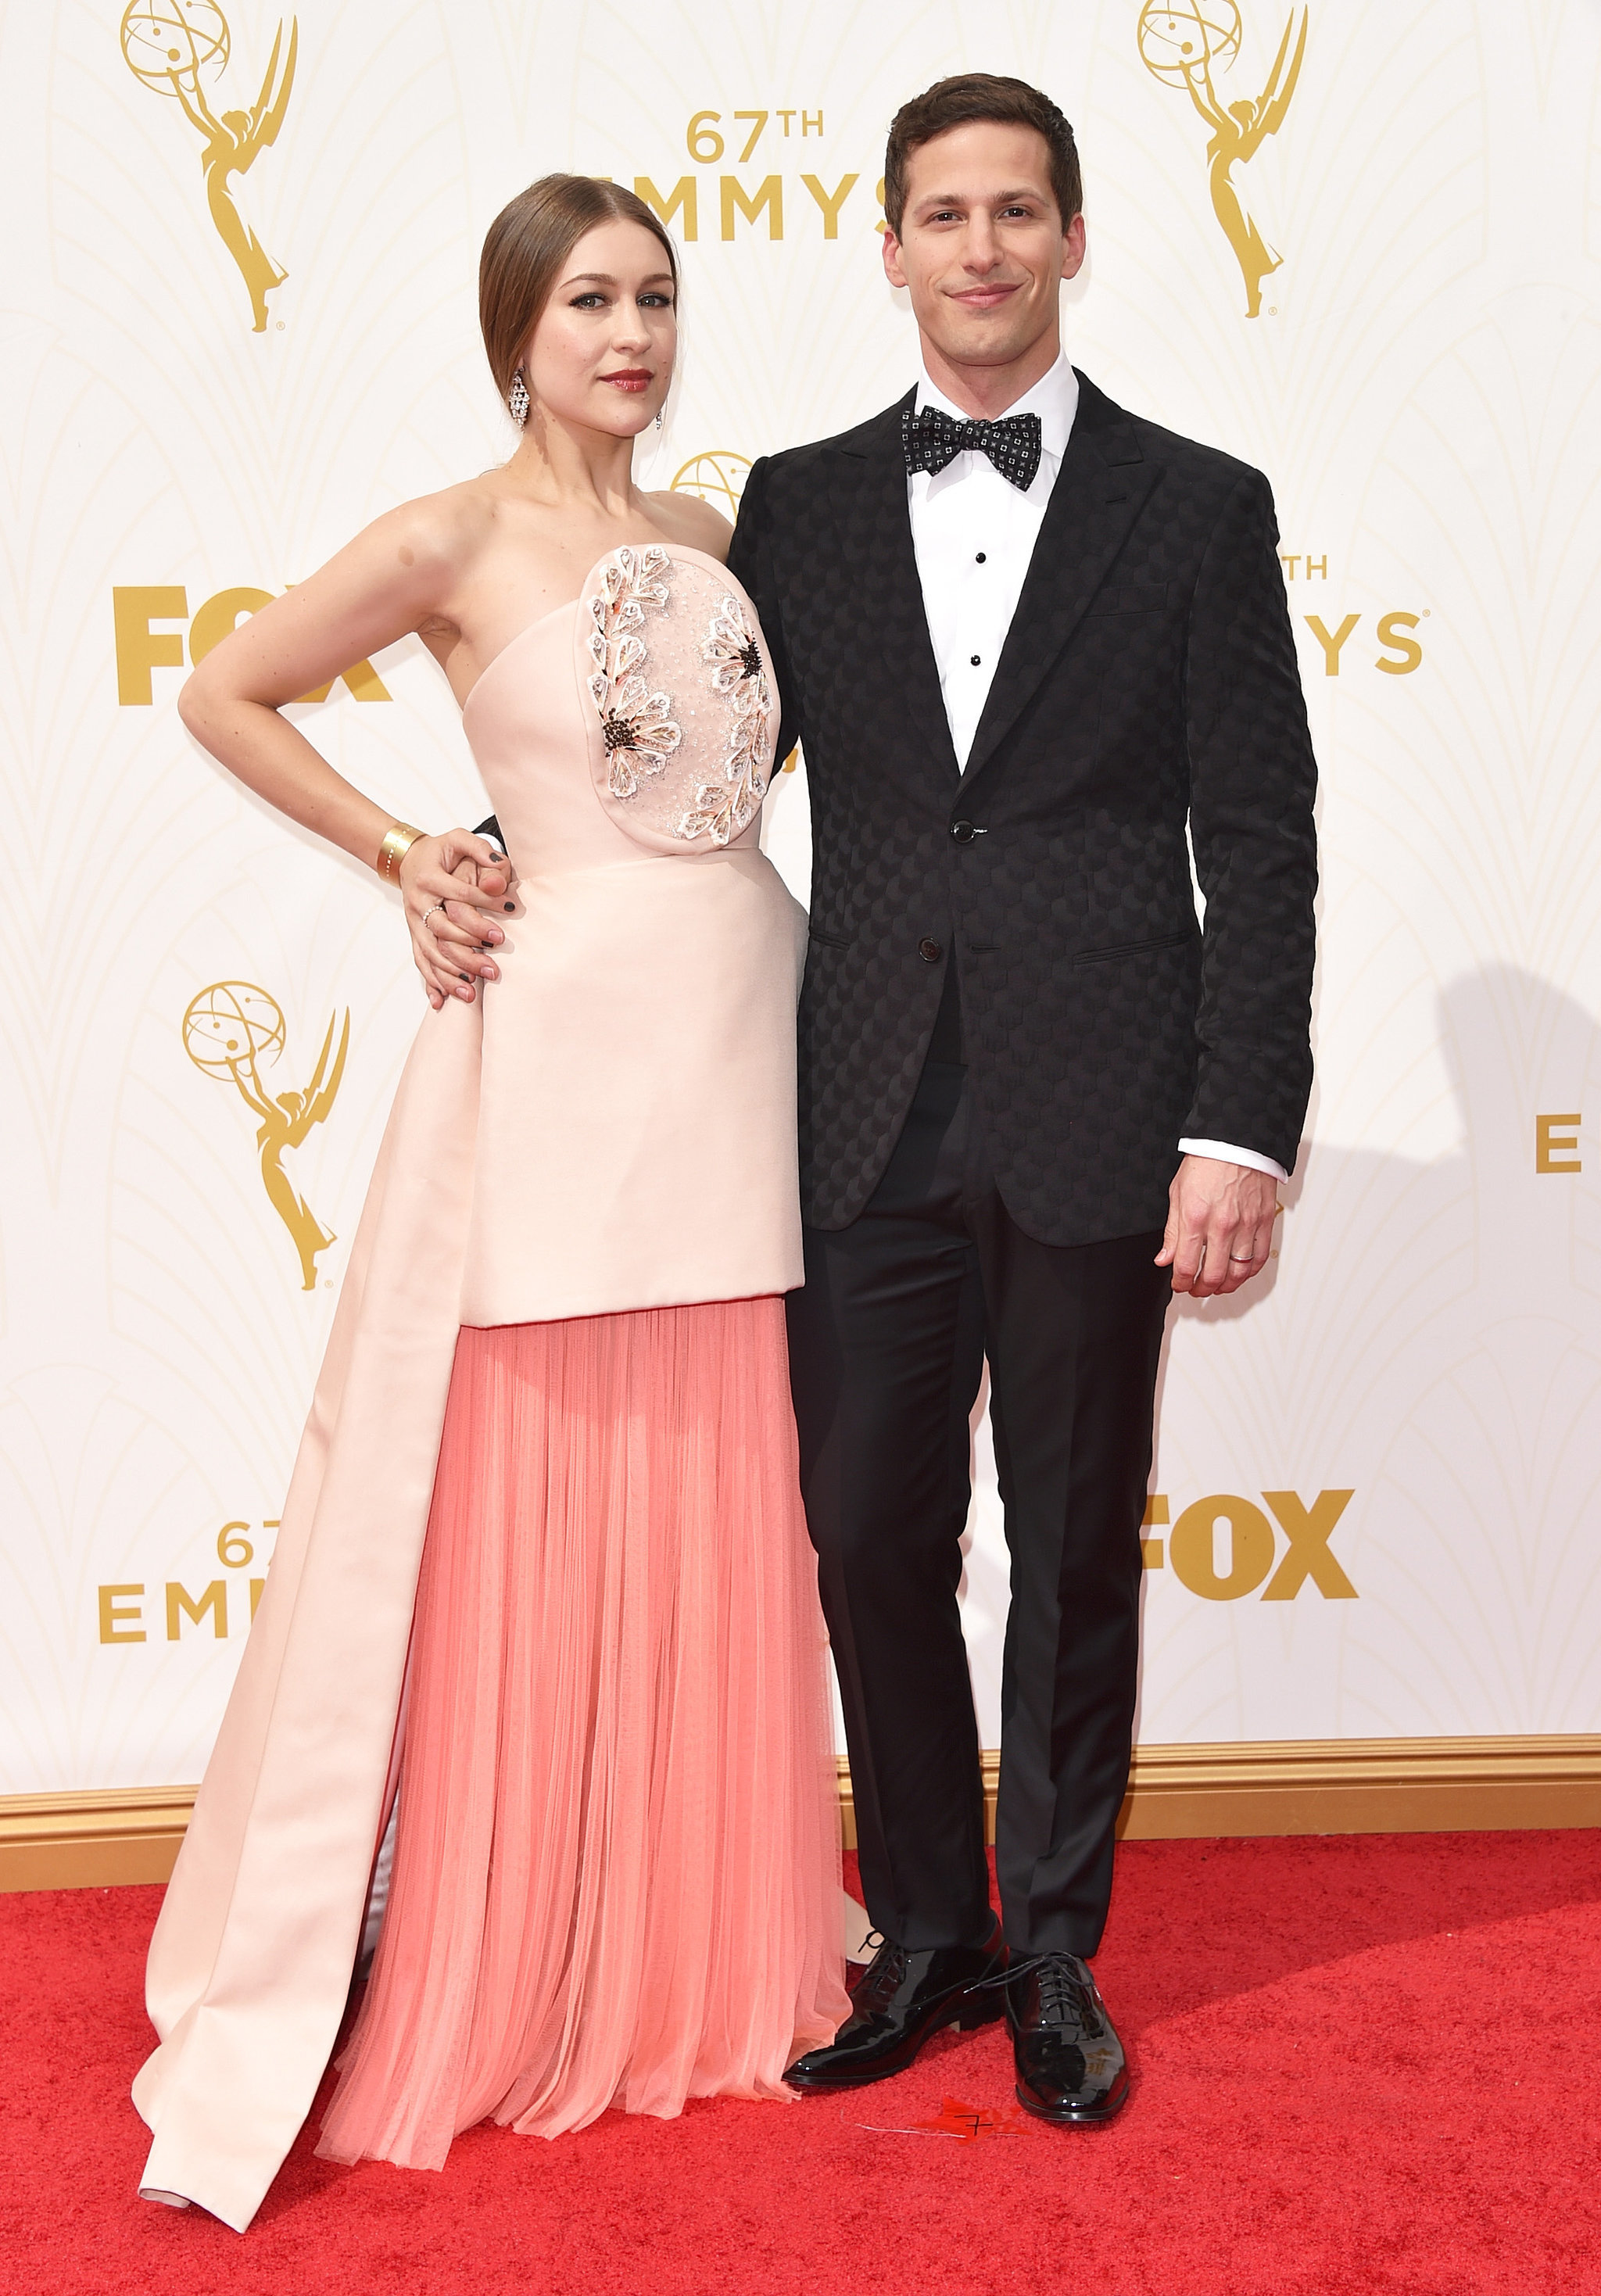 Andy Samberg And Joanna Newsom Hollywood Couples Showed A Whole Lot